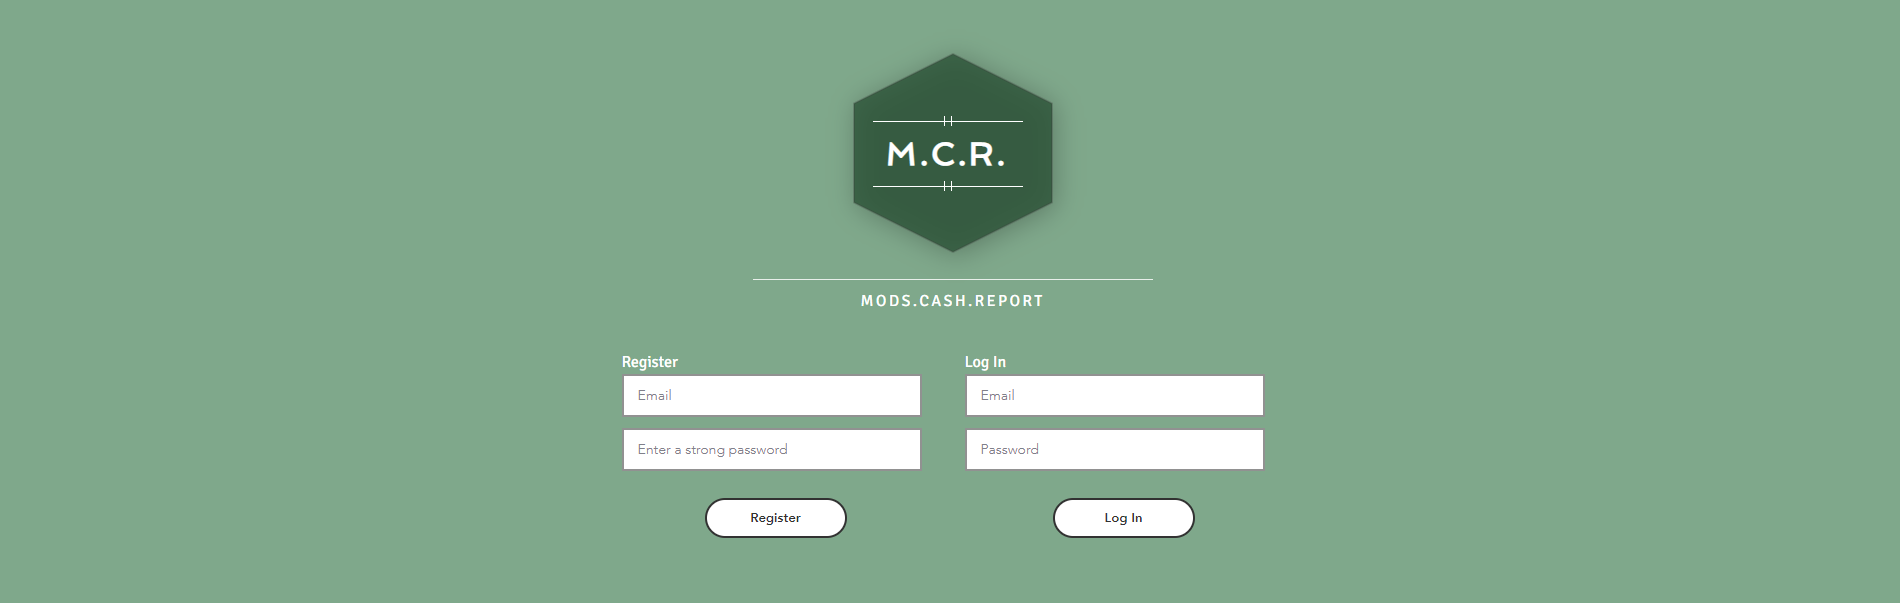 MoDS Cash Report | Joshua Kern Dev